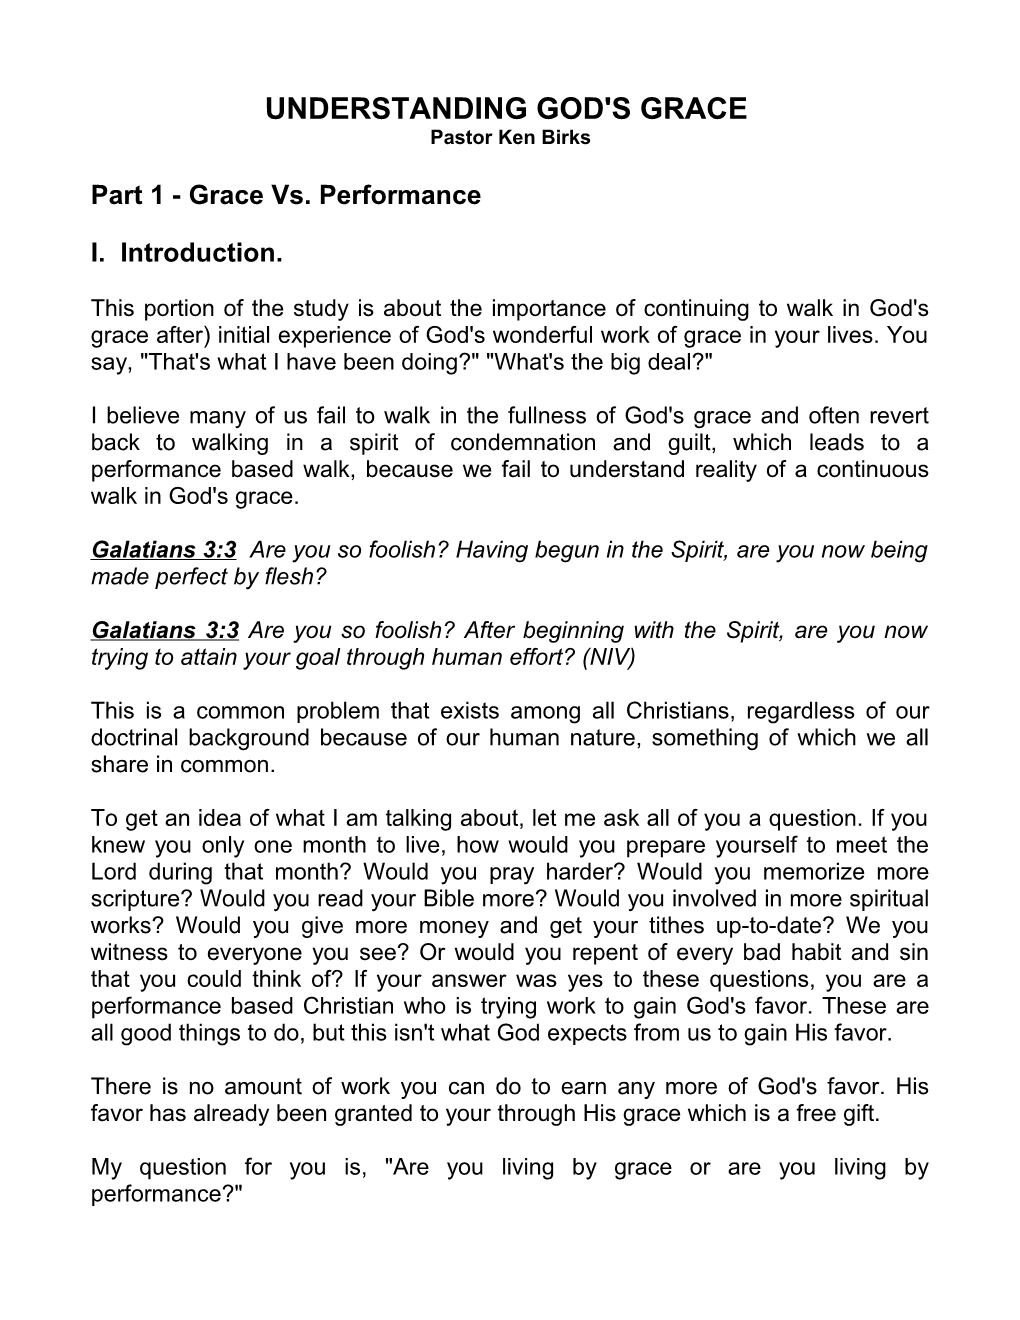 Understanding God's Grace